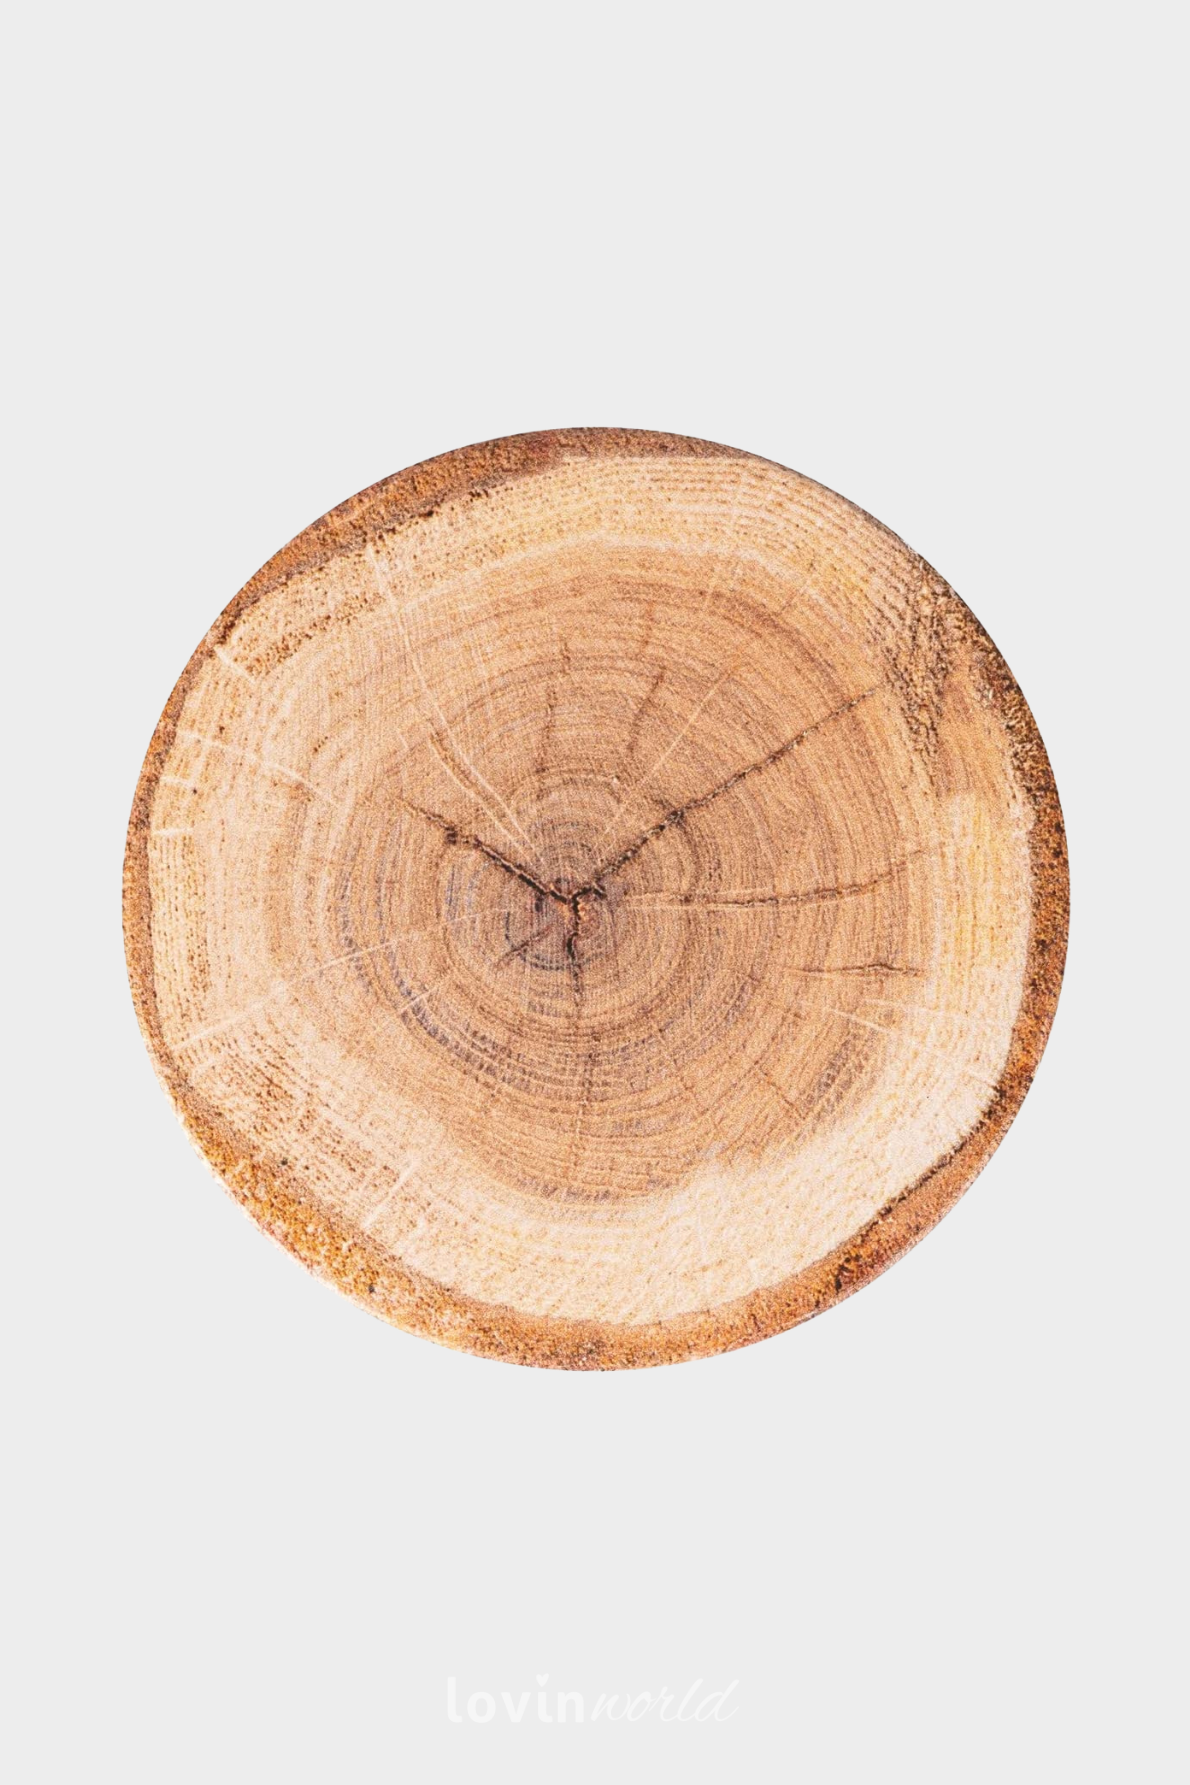 Set 4 sottobicchiere Wood, Ø 10 cm.-5